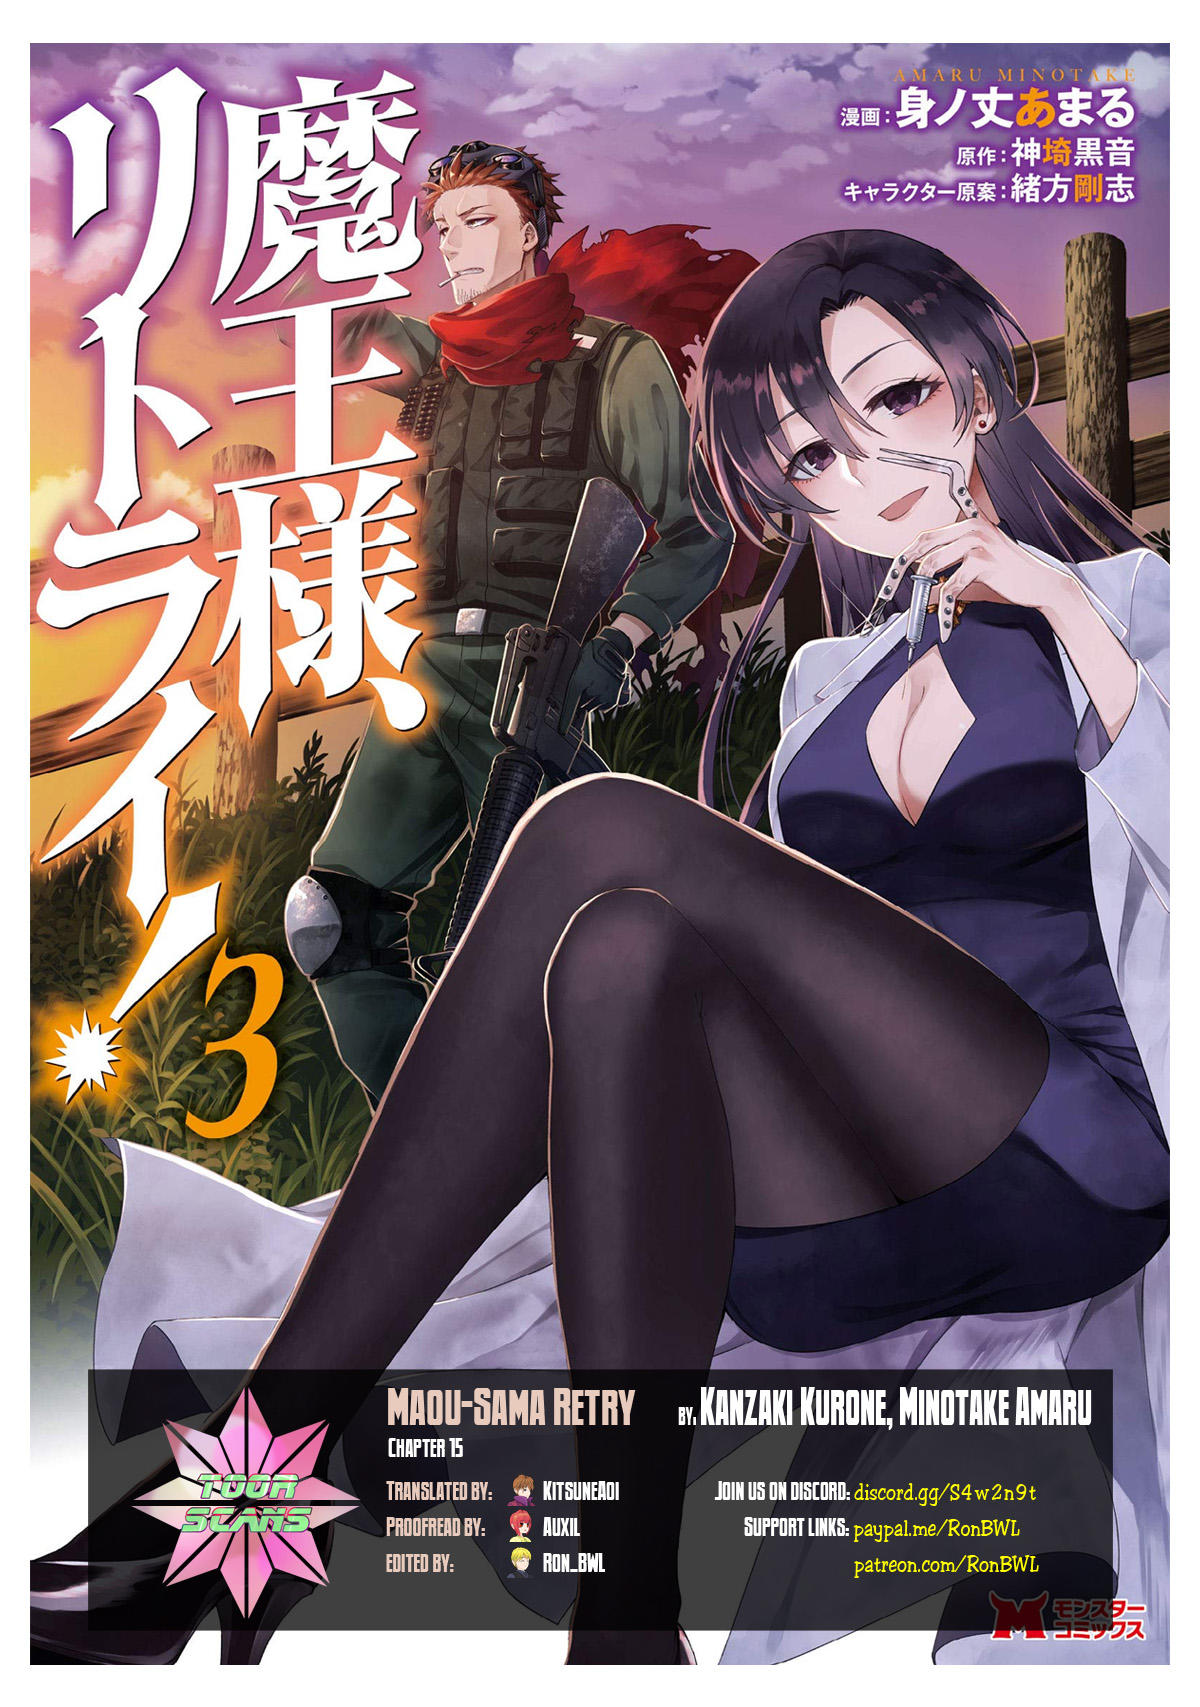 Read Maou-Sama Retry Manga Online Free - Manganelo